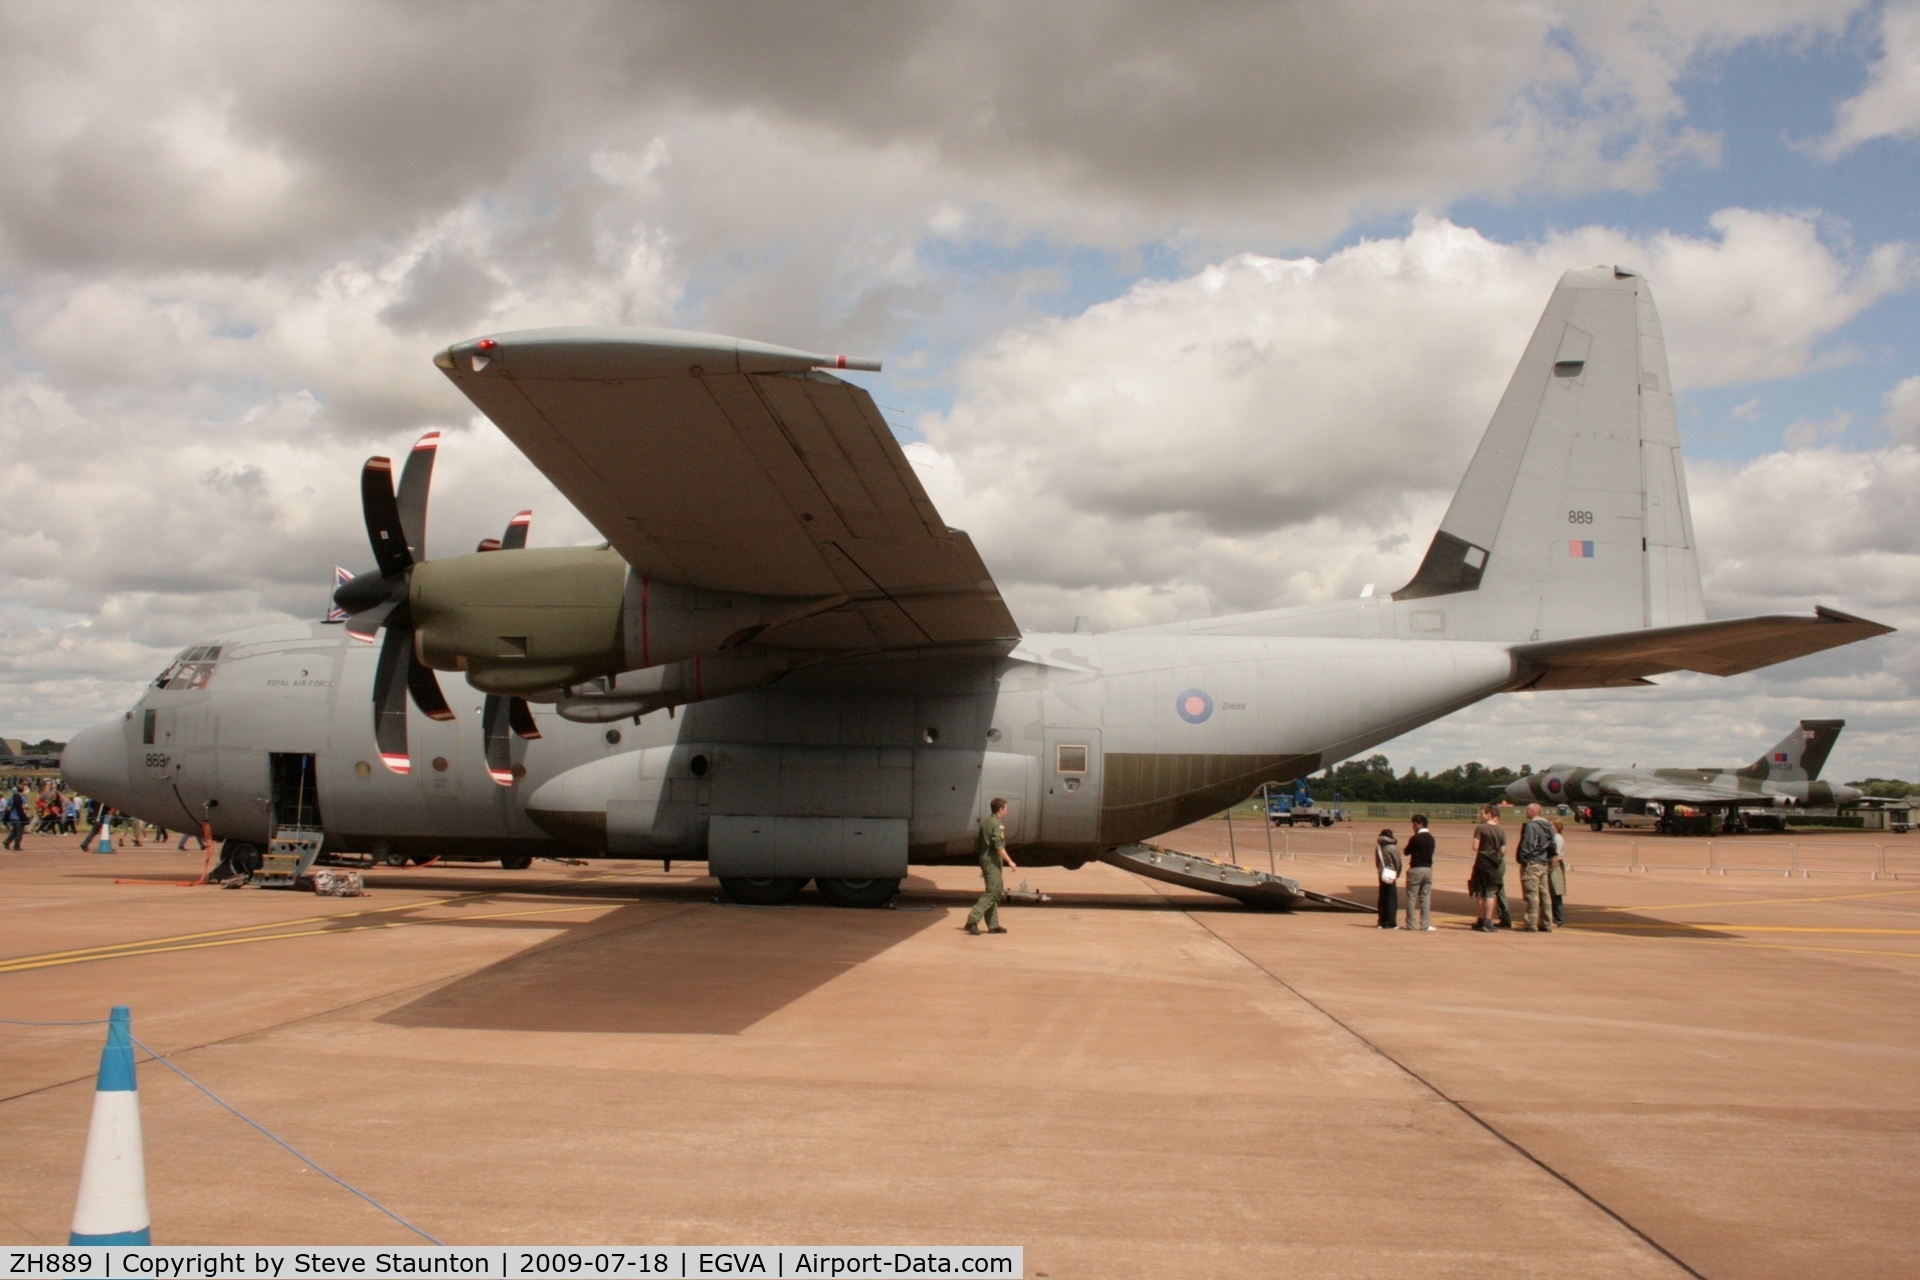 ZH889, 2000 Lockheed Martin C-130J Hercules C.5 C/N 382-5500, Taken at the Royal International Air Tattoo 2009